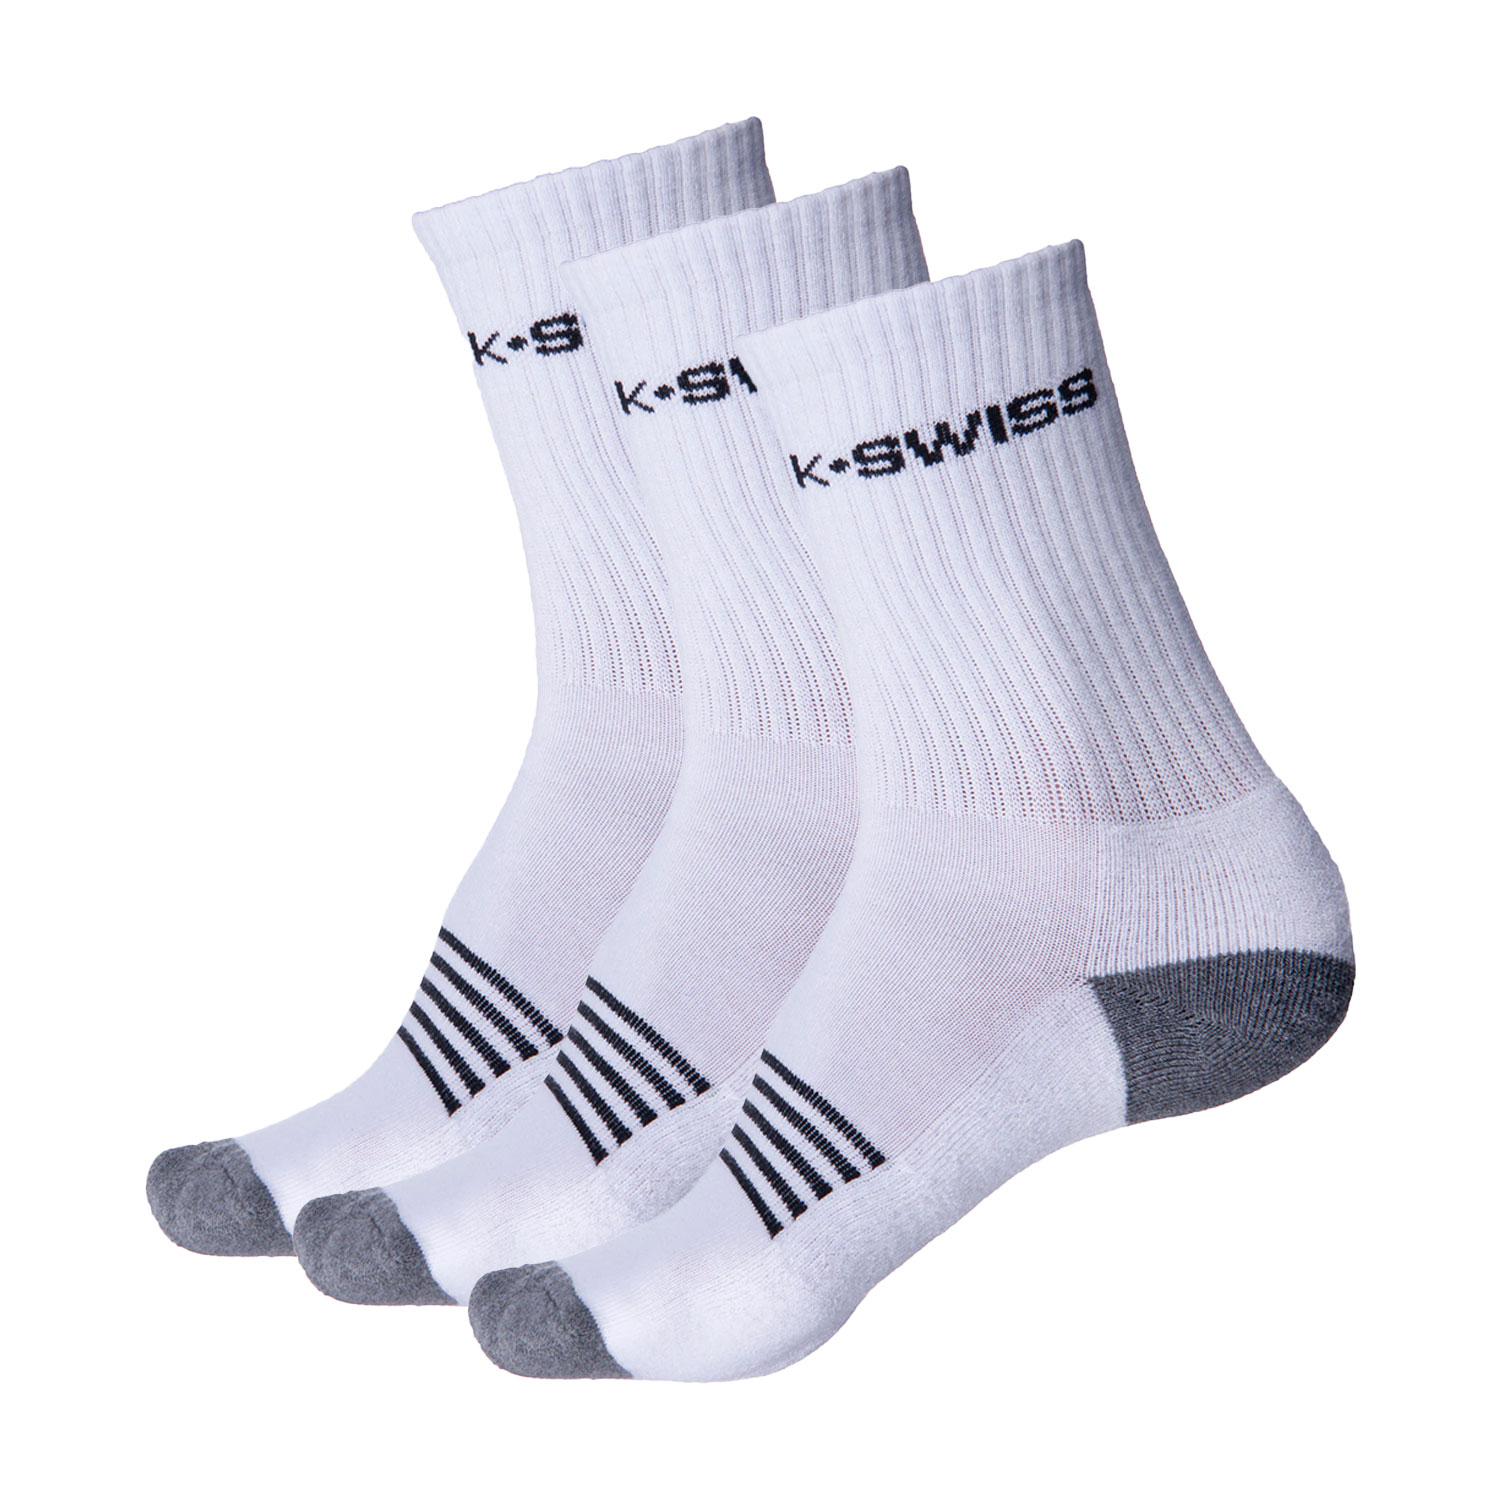 K-Swiss Crew x 3 Socks - White/Black